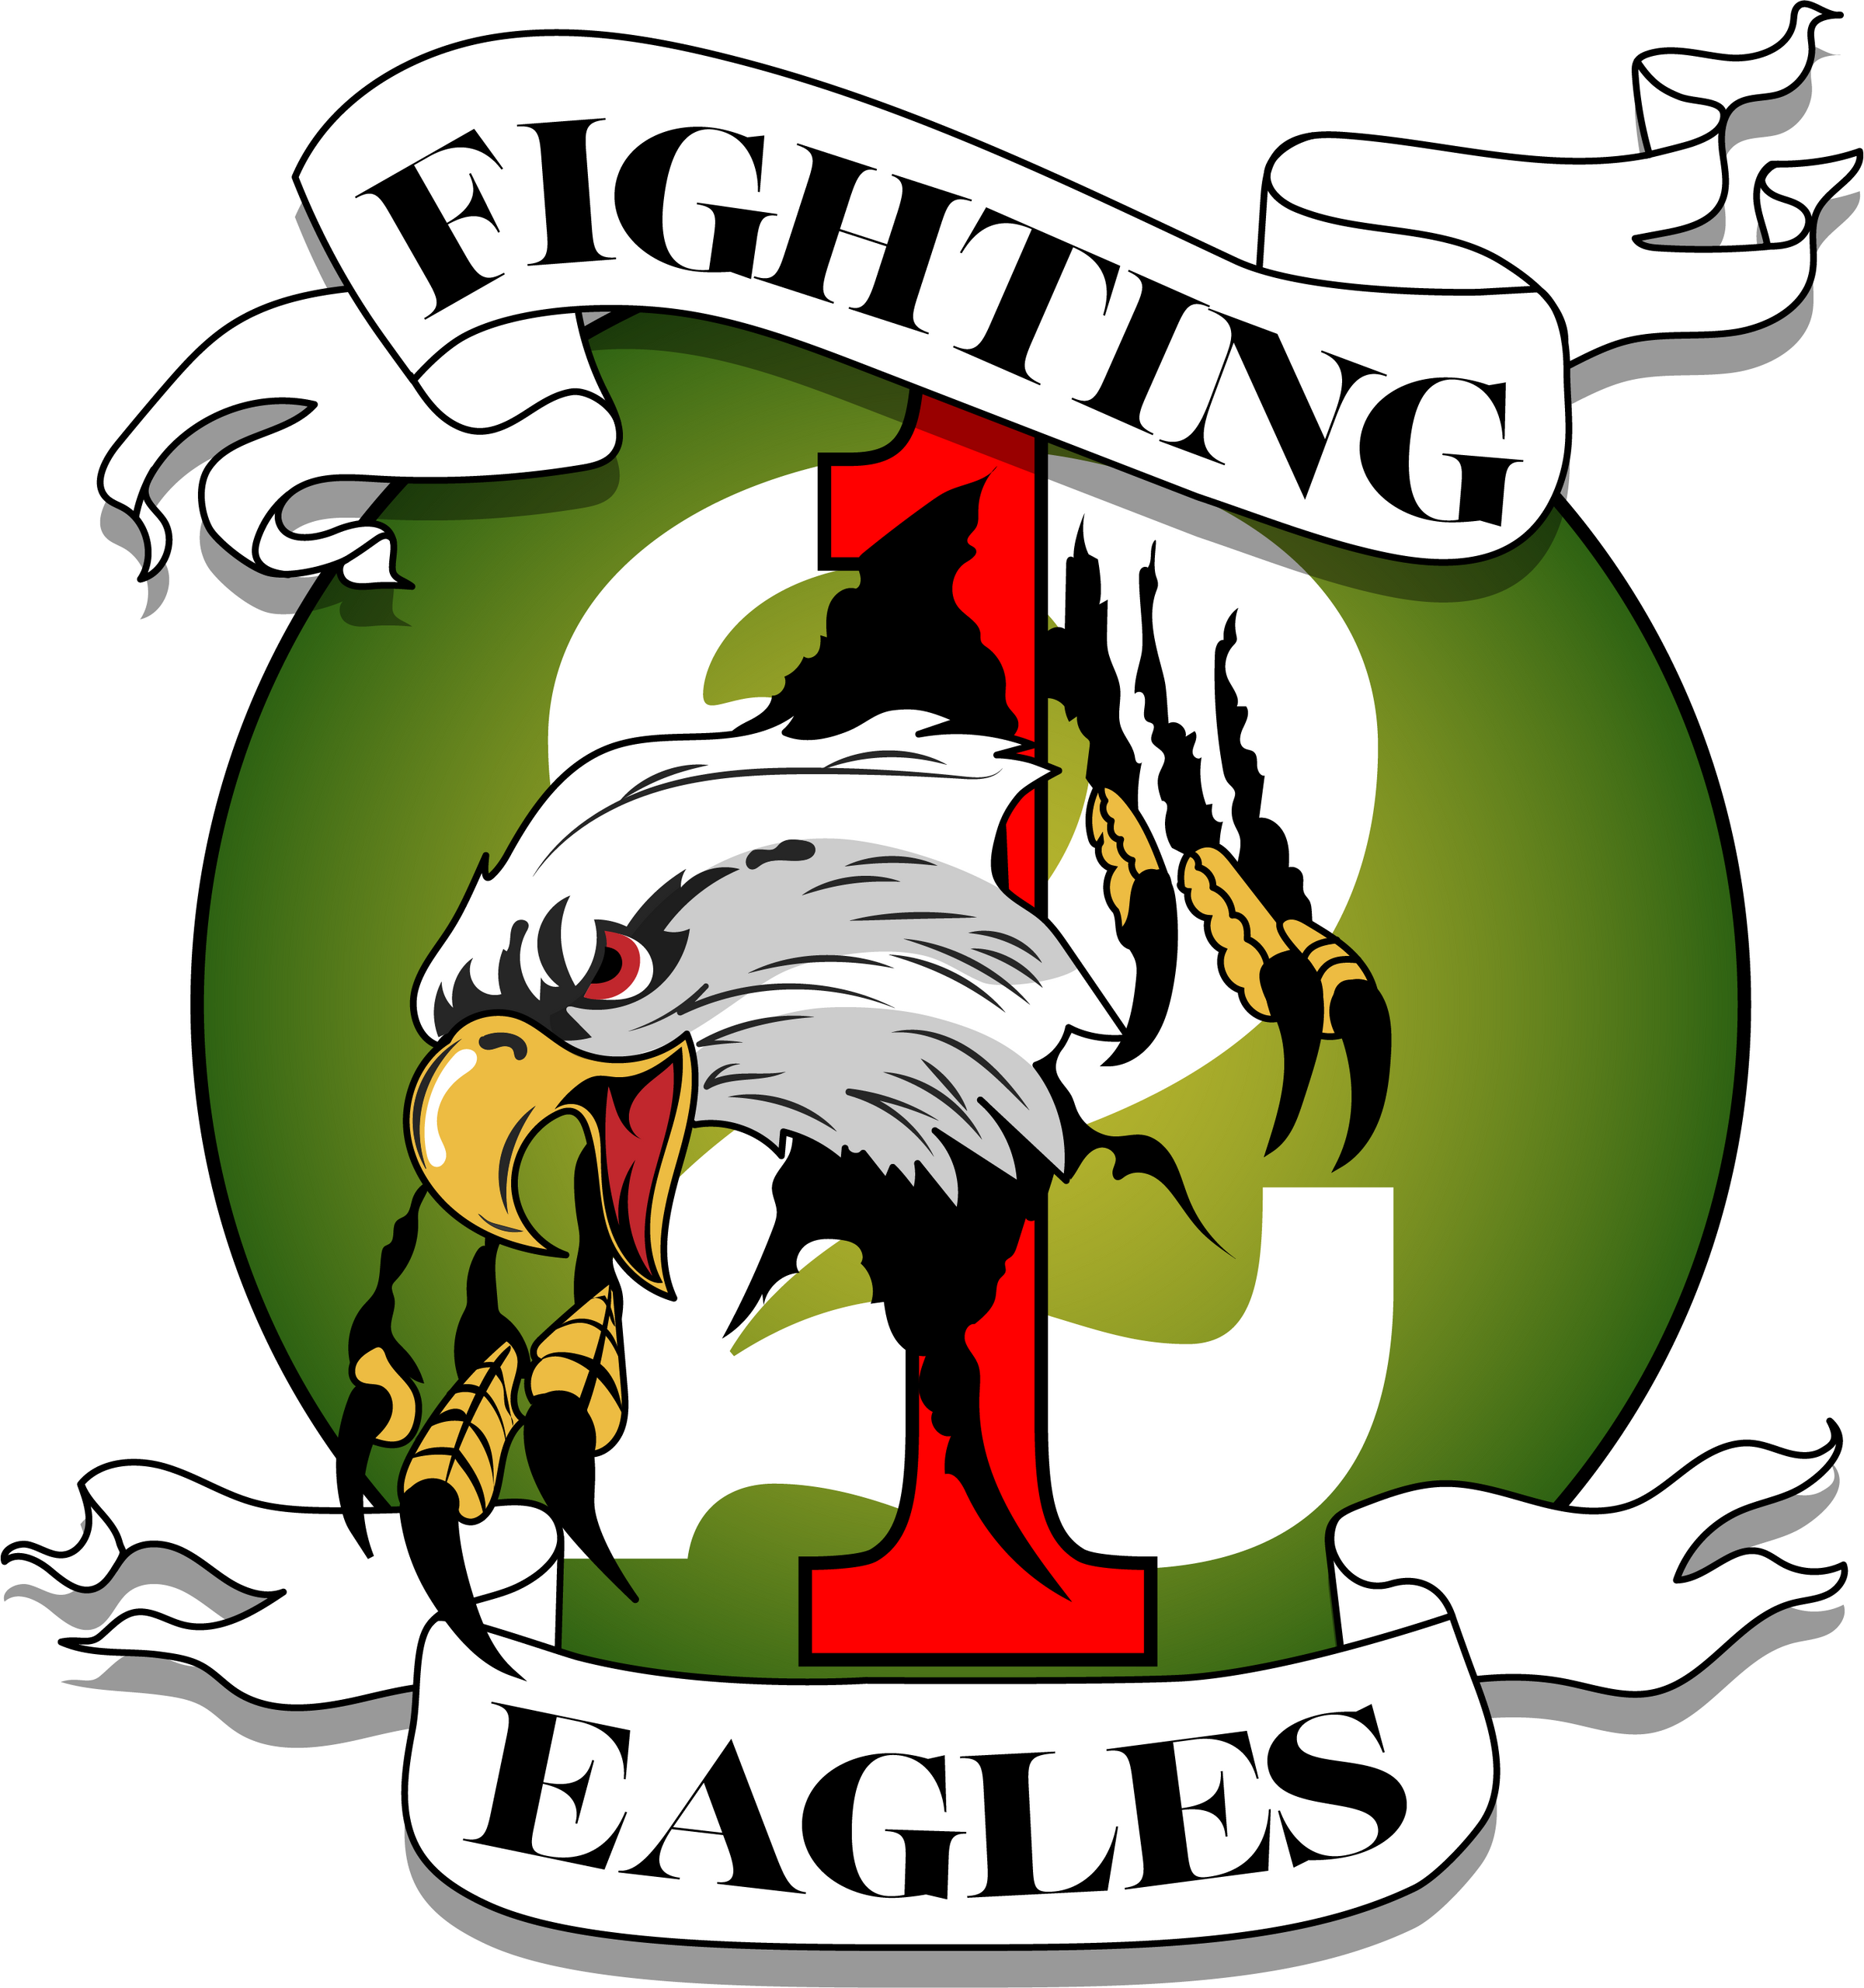 2-1 GSAB "Fighting Eagles"